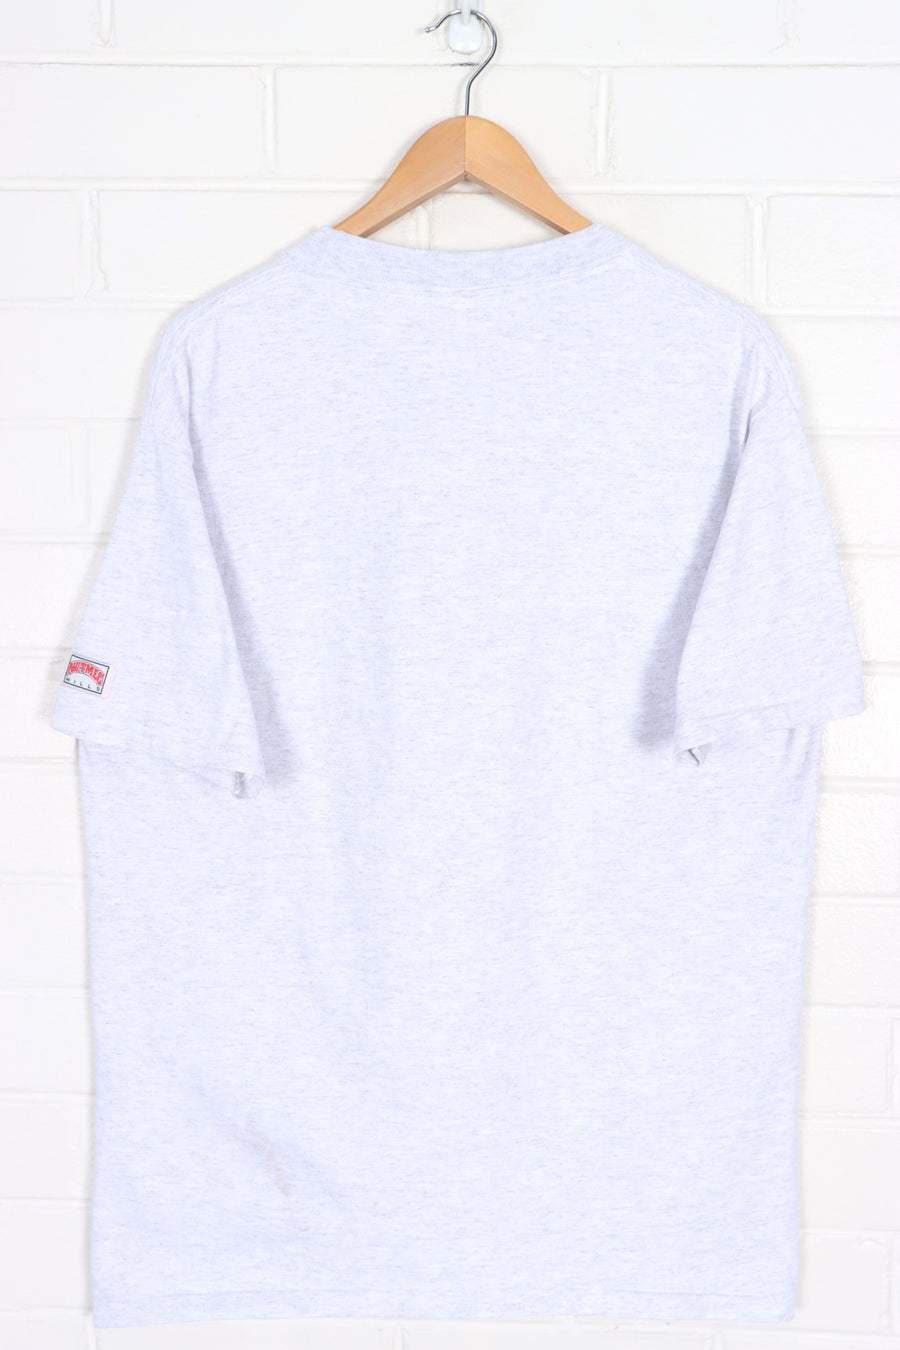 Indianapolis 500 Race 1991 NUTMEG Single Stitch T-Shirt USA Made (XL)